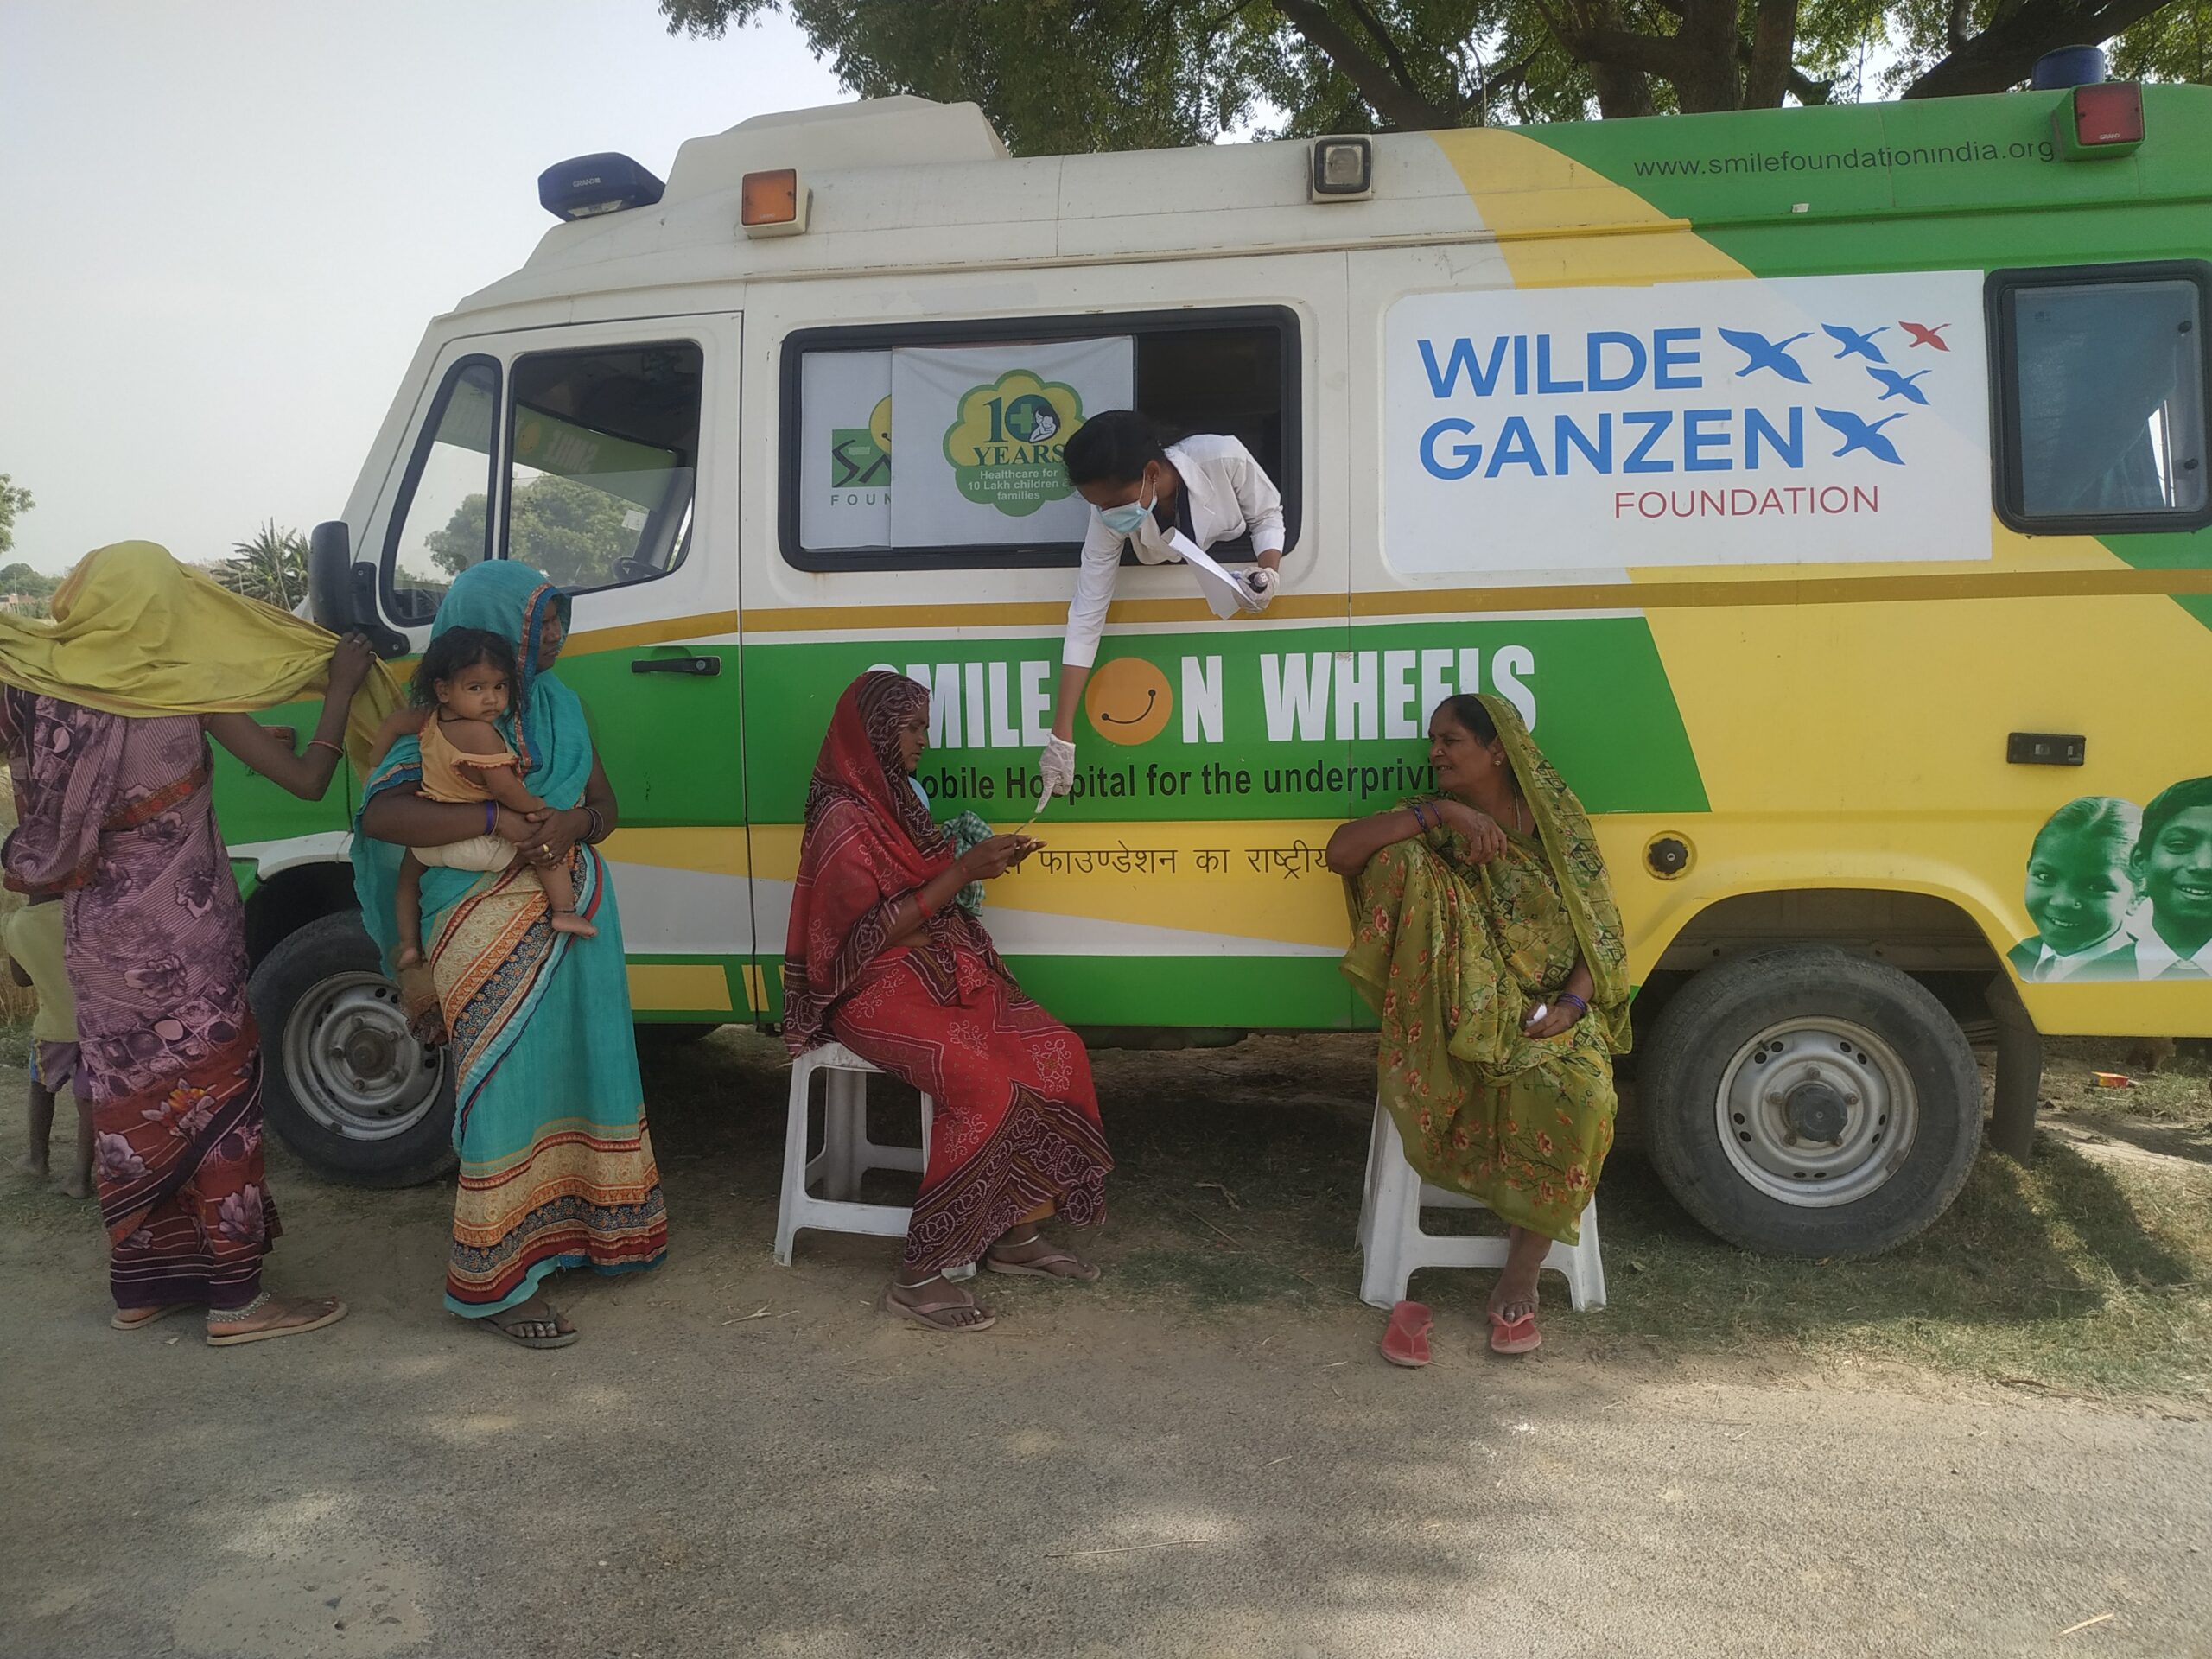 Smile-Foundation-mobile-medical-unit-in-Varanasi